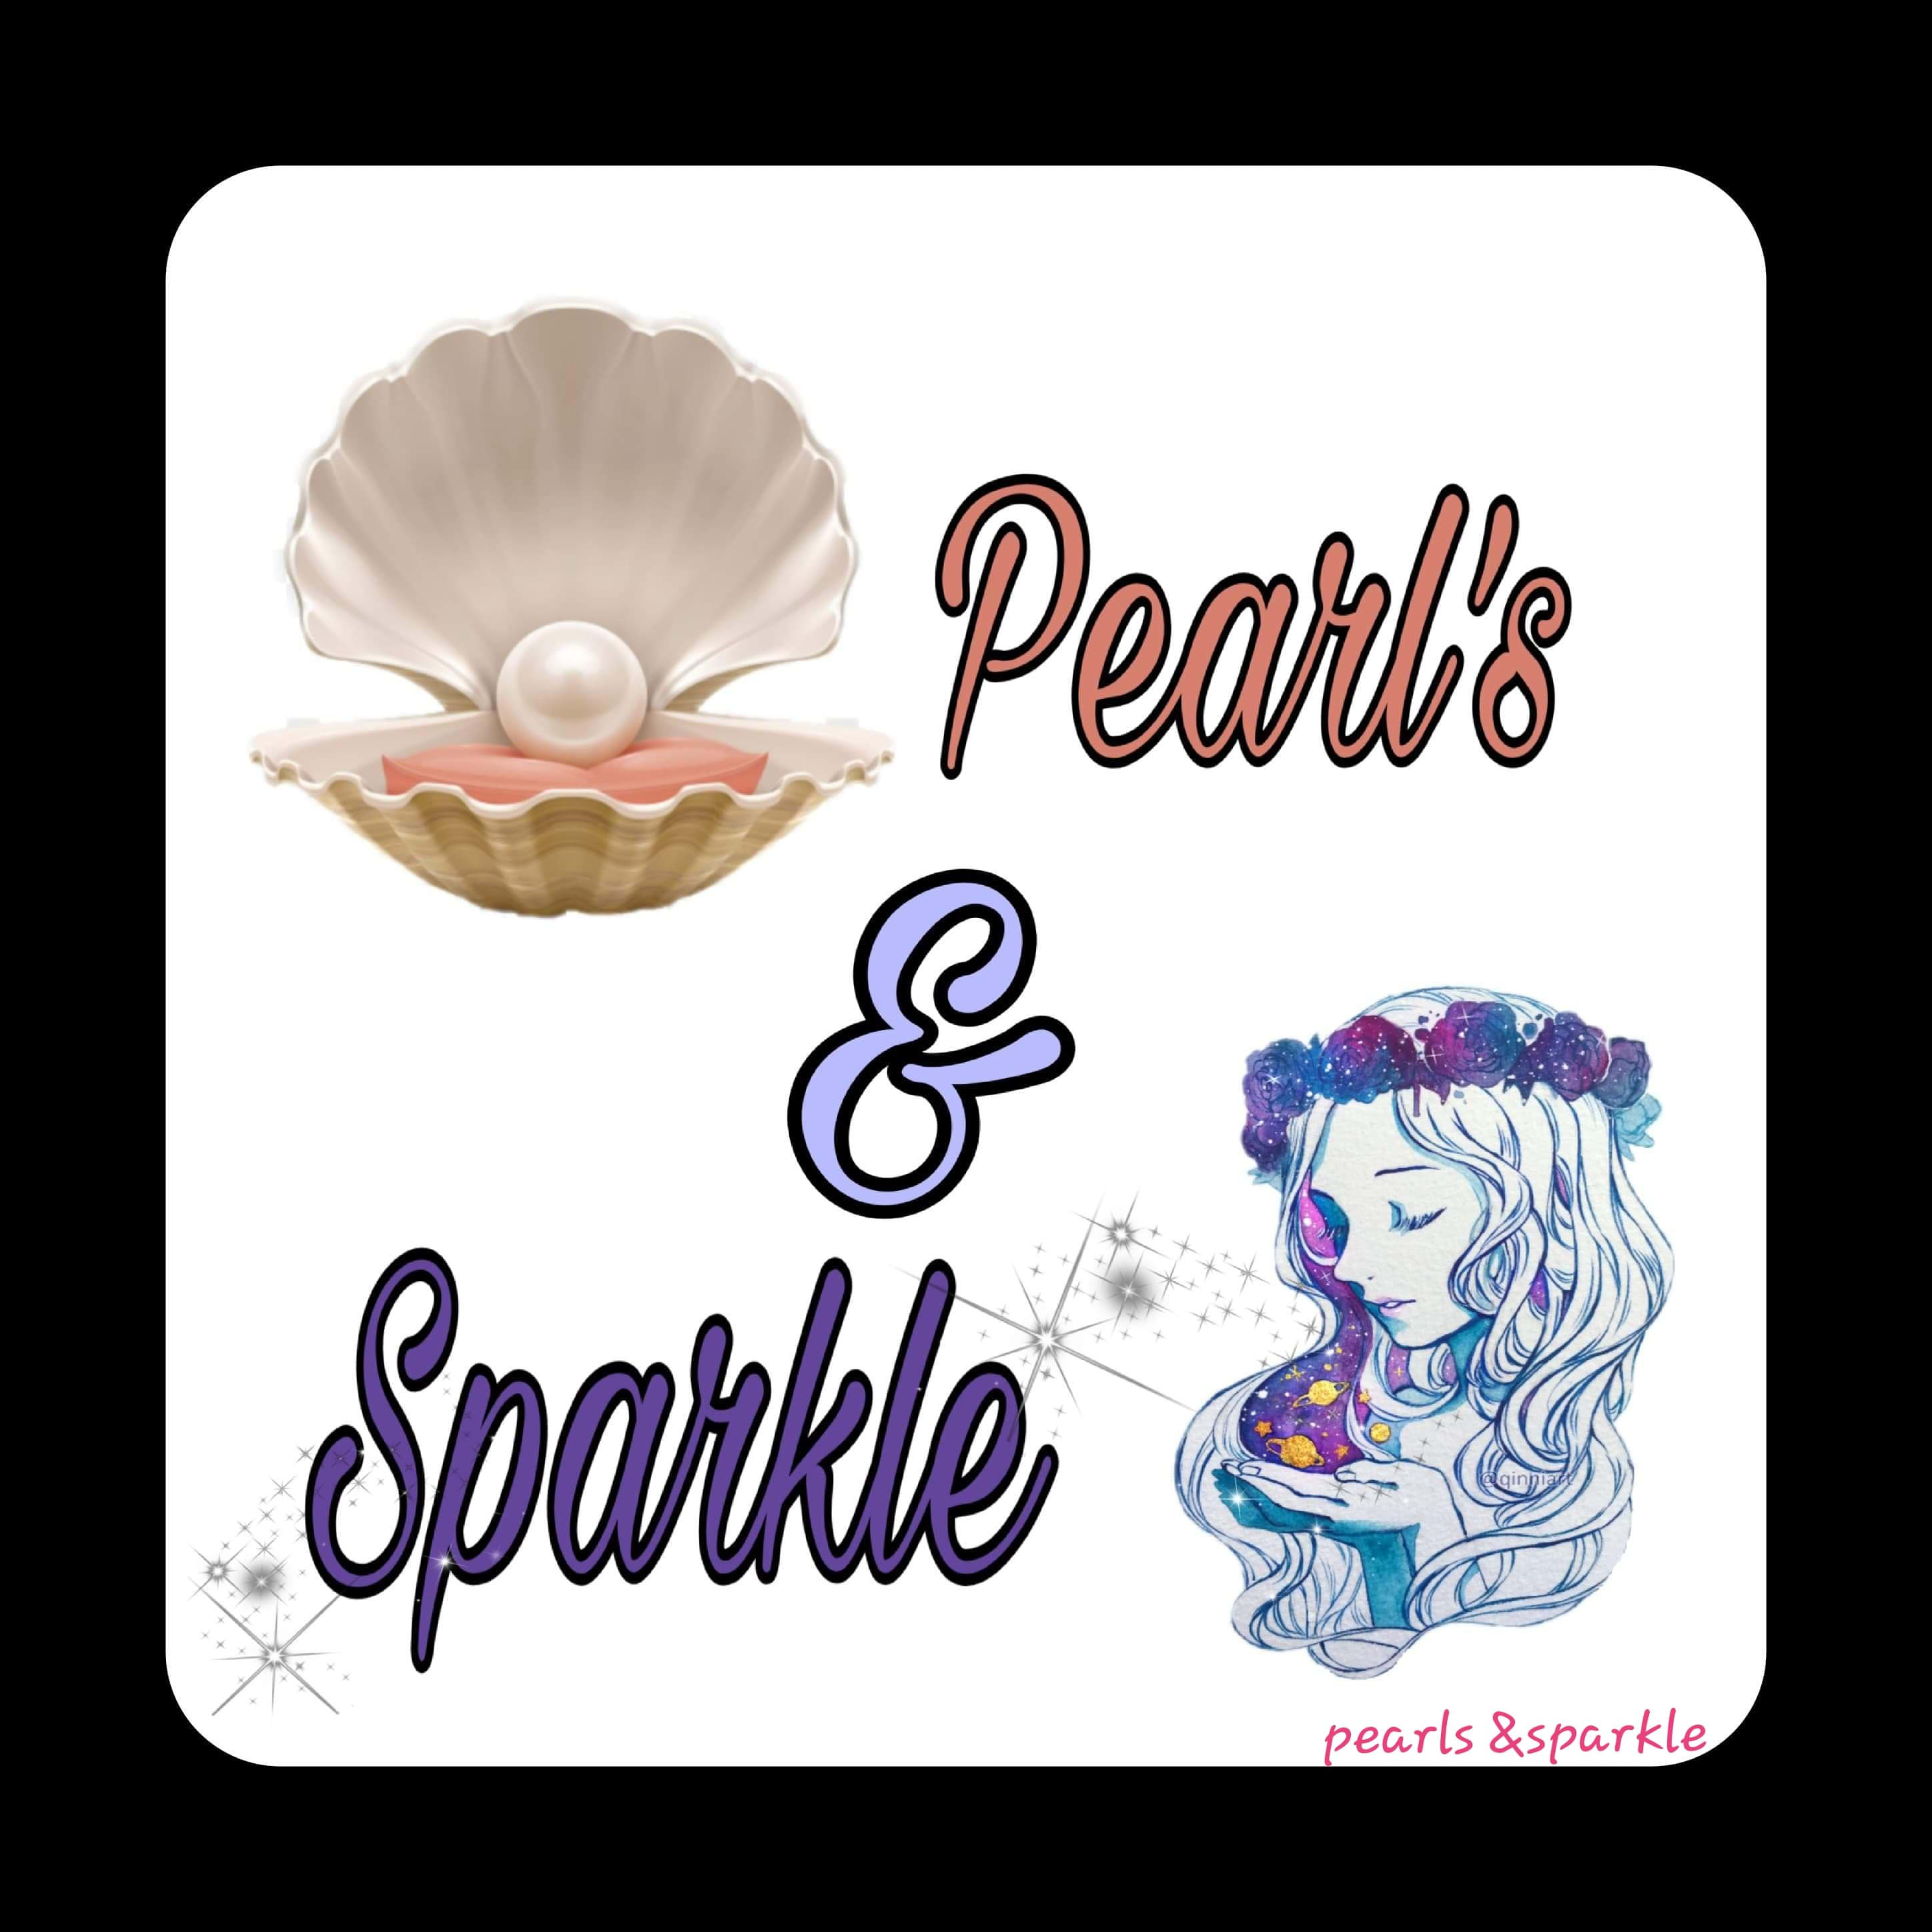 Pearl' & Sparle's